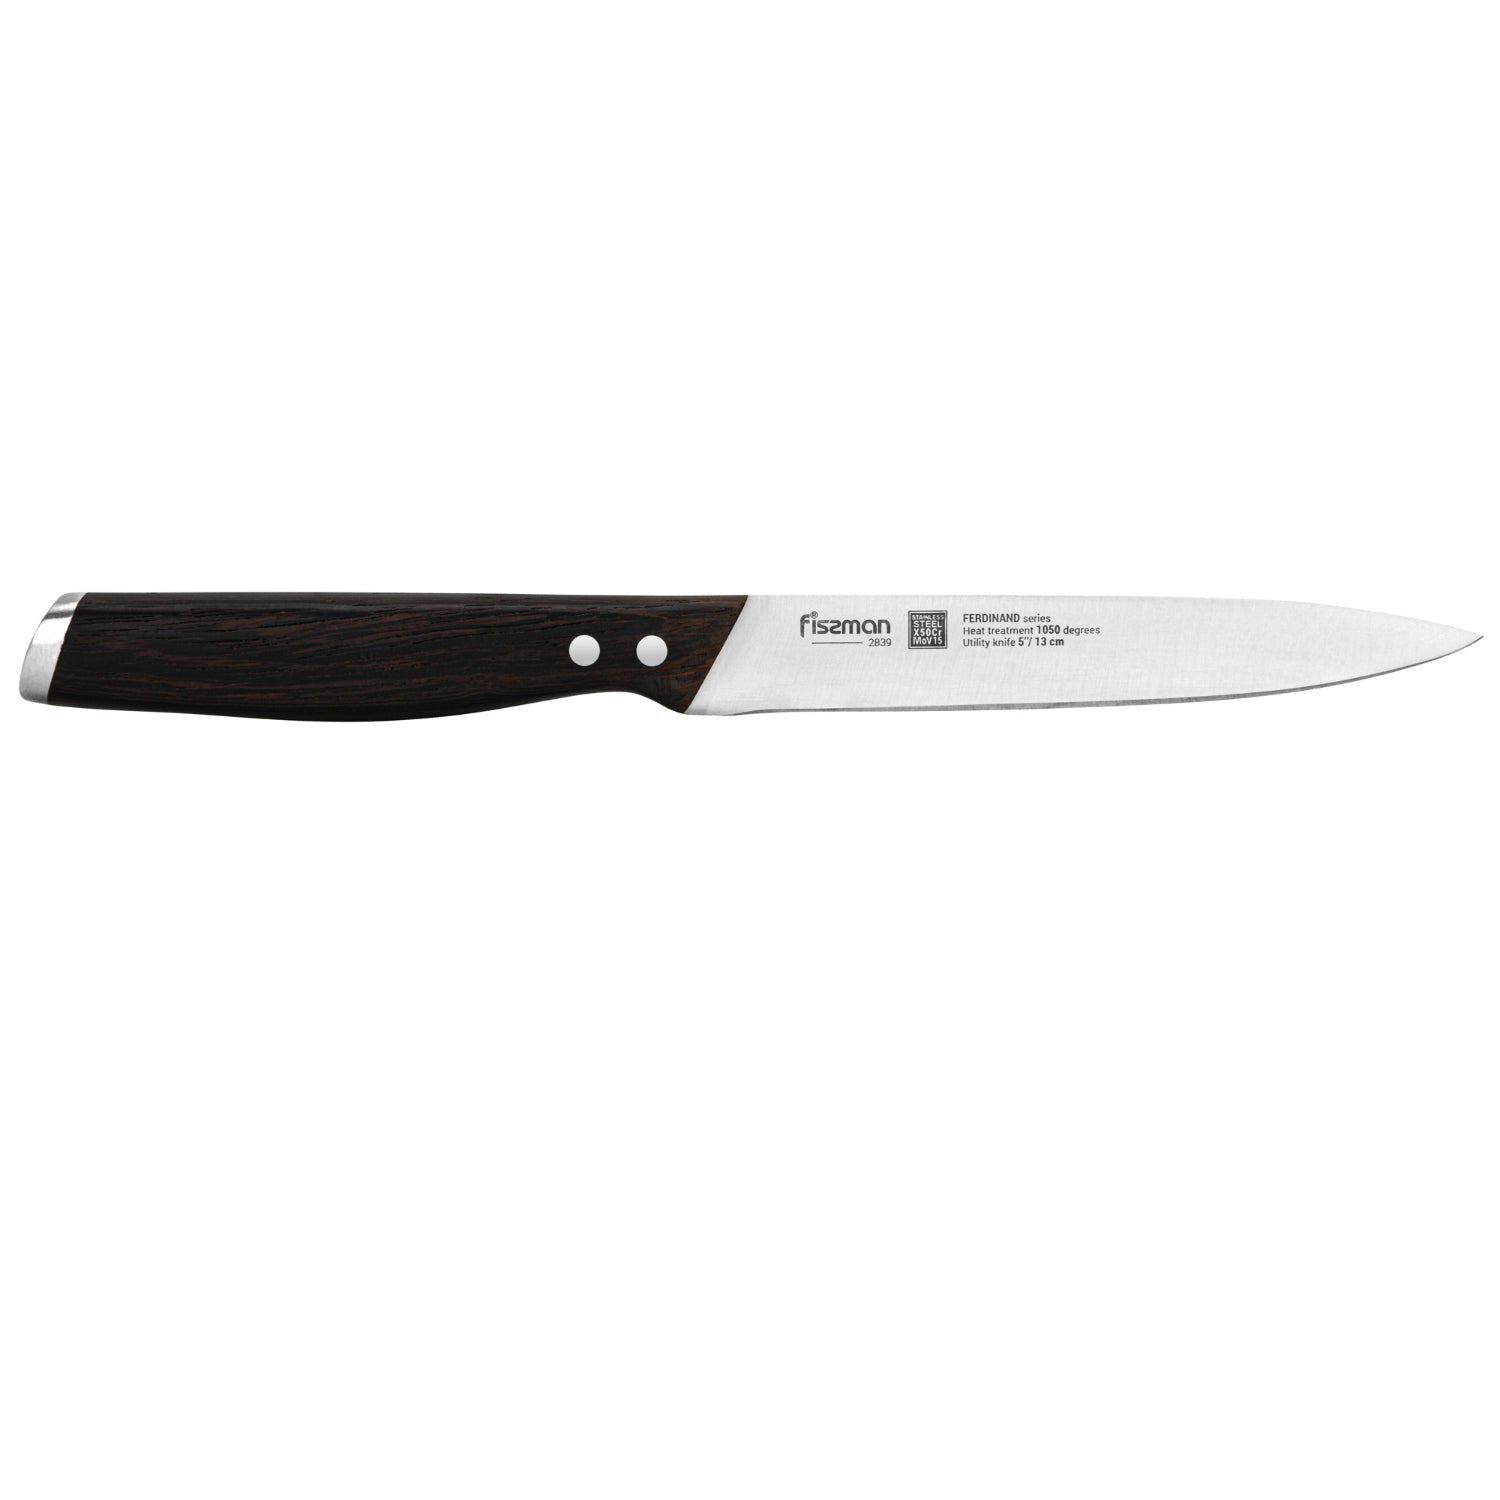 Fissman 5'' Utility Knife Ferdinand - X50CrMoV15 steel